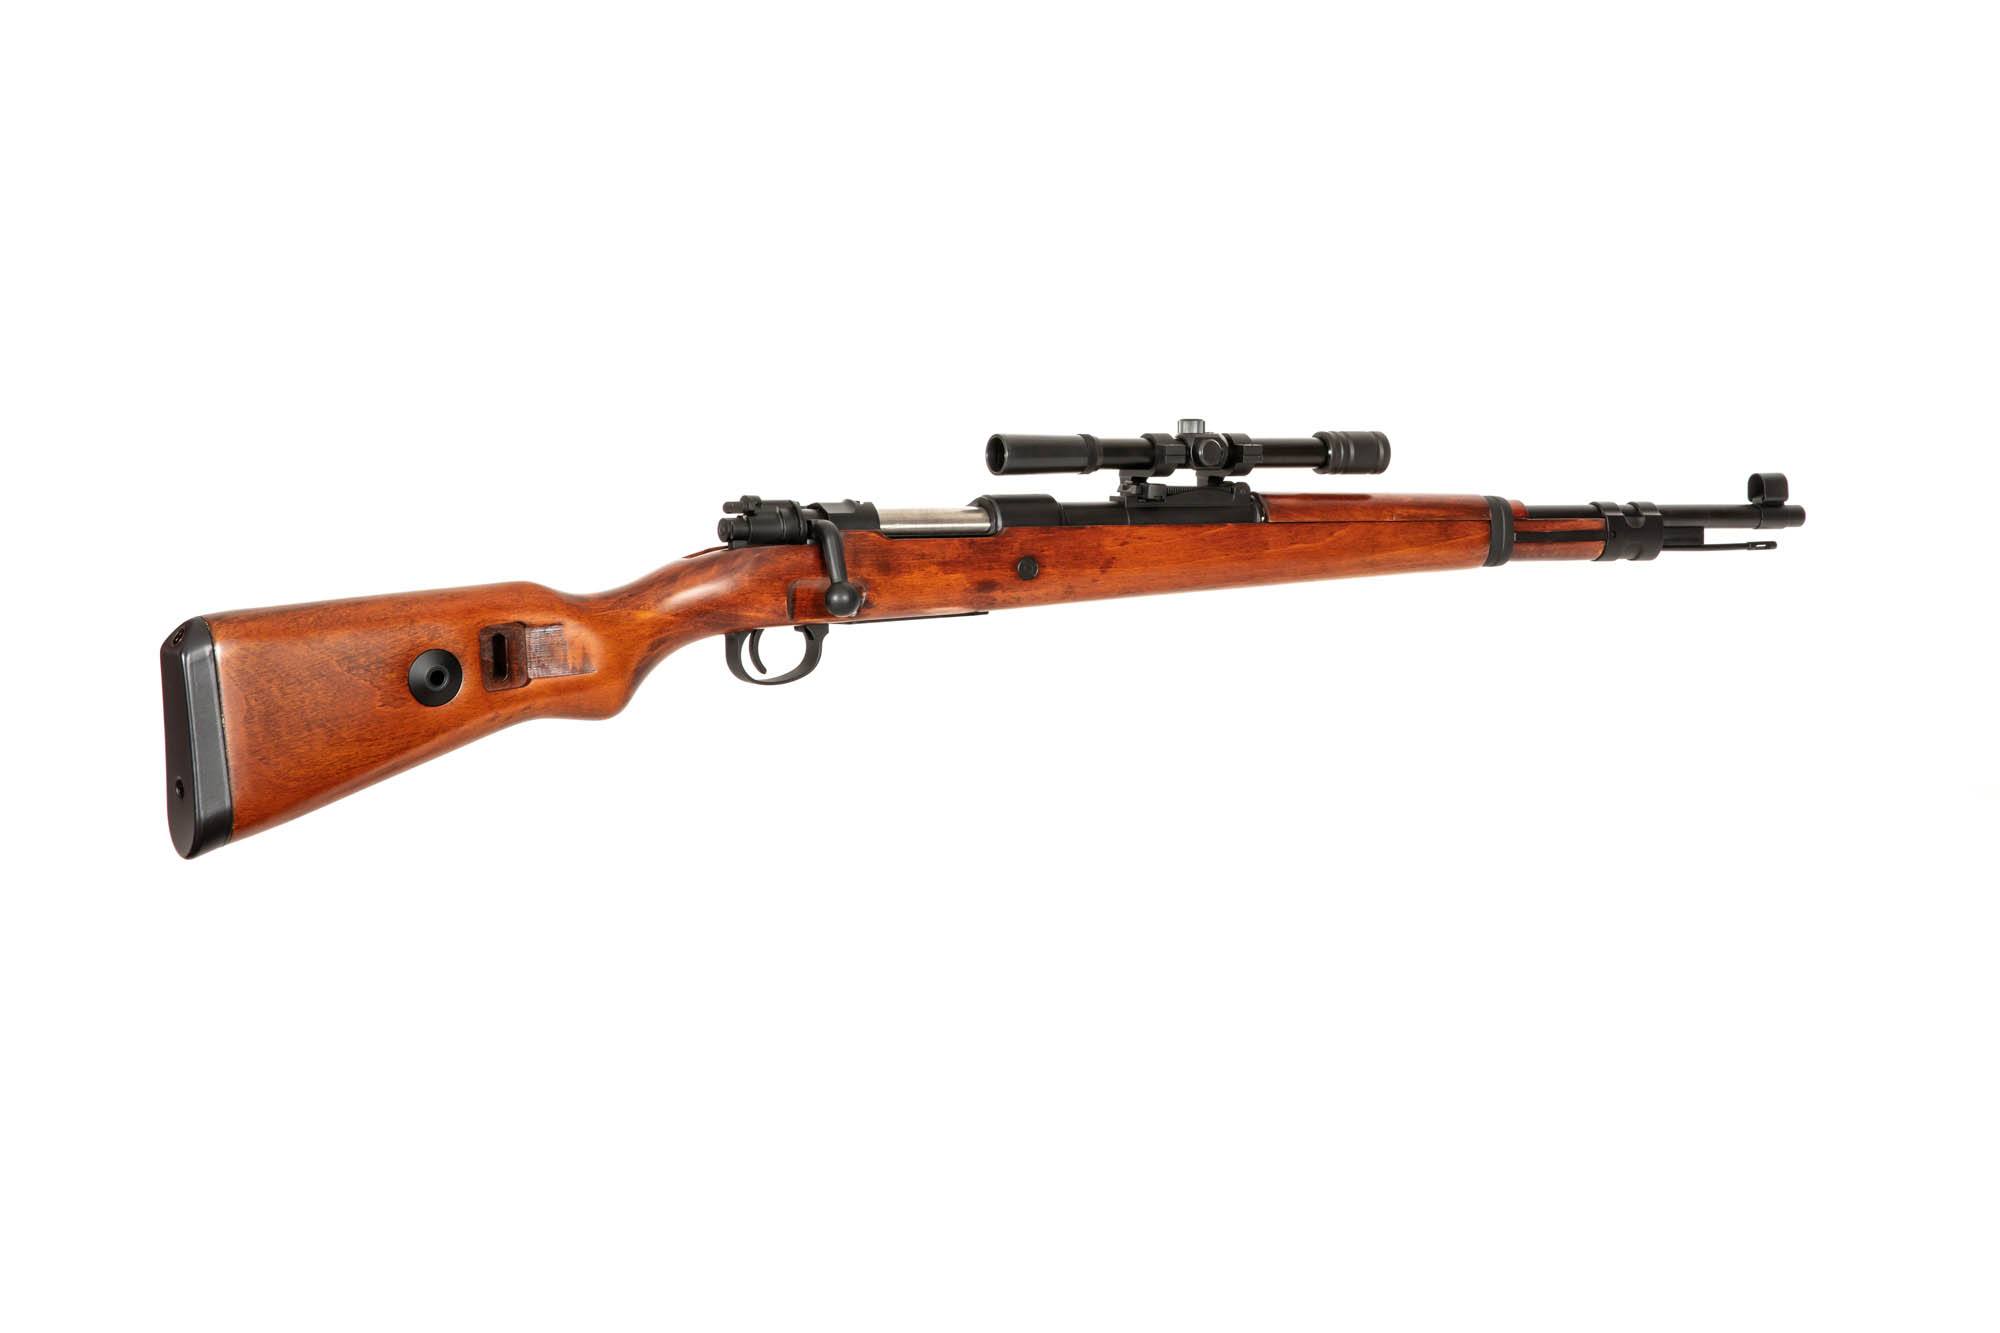 Kar98 Rifle Replica with scope (wood stock)